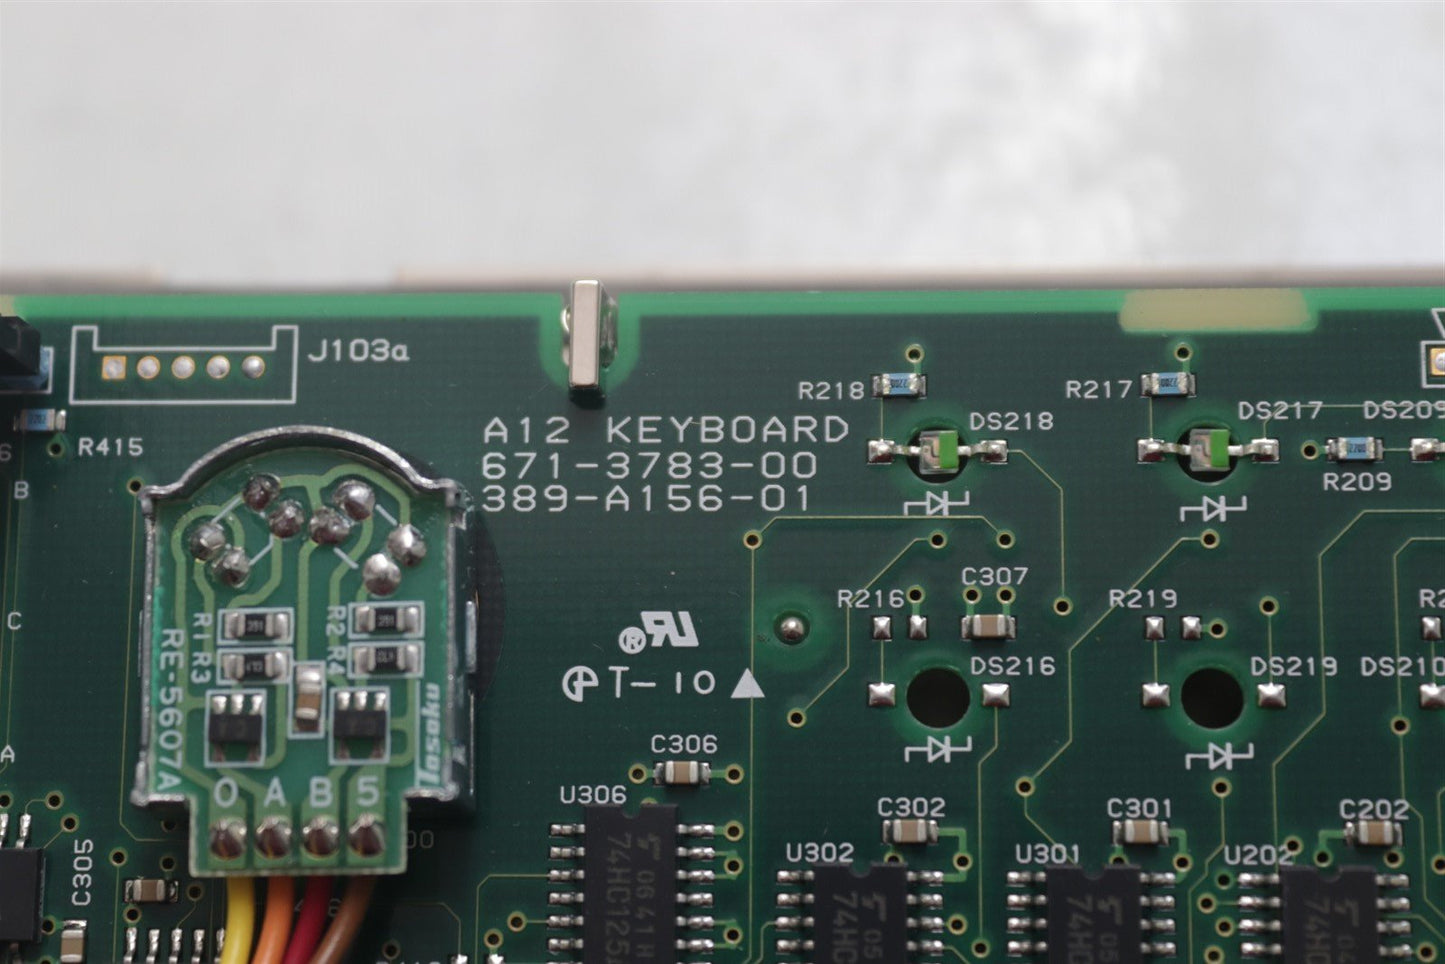 Tektronix DG2020A Data Generator 200 Mbps A12 Keyboard Assy